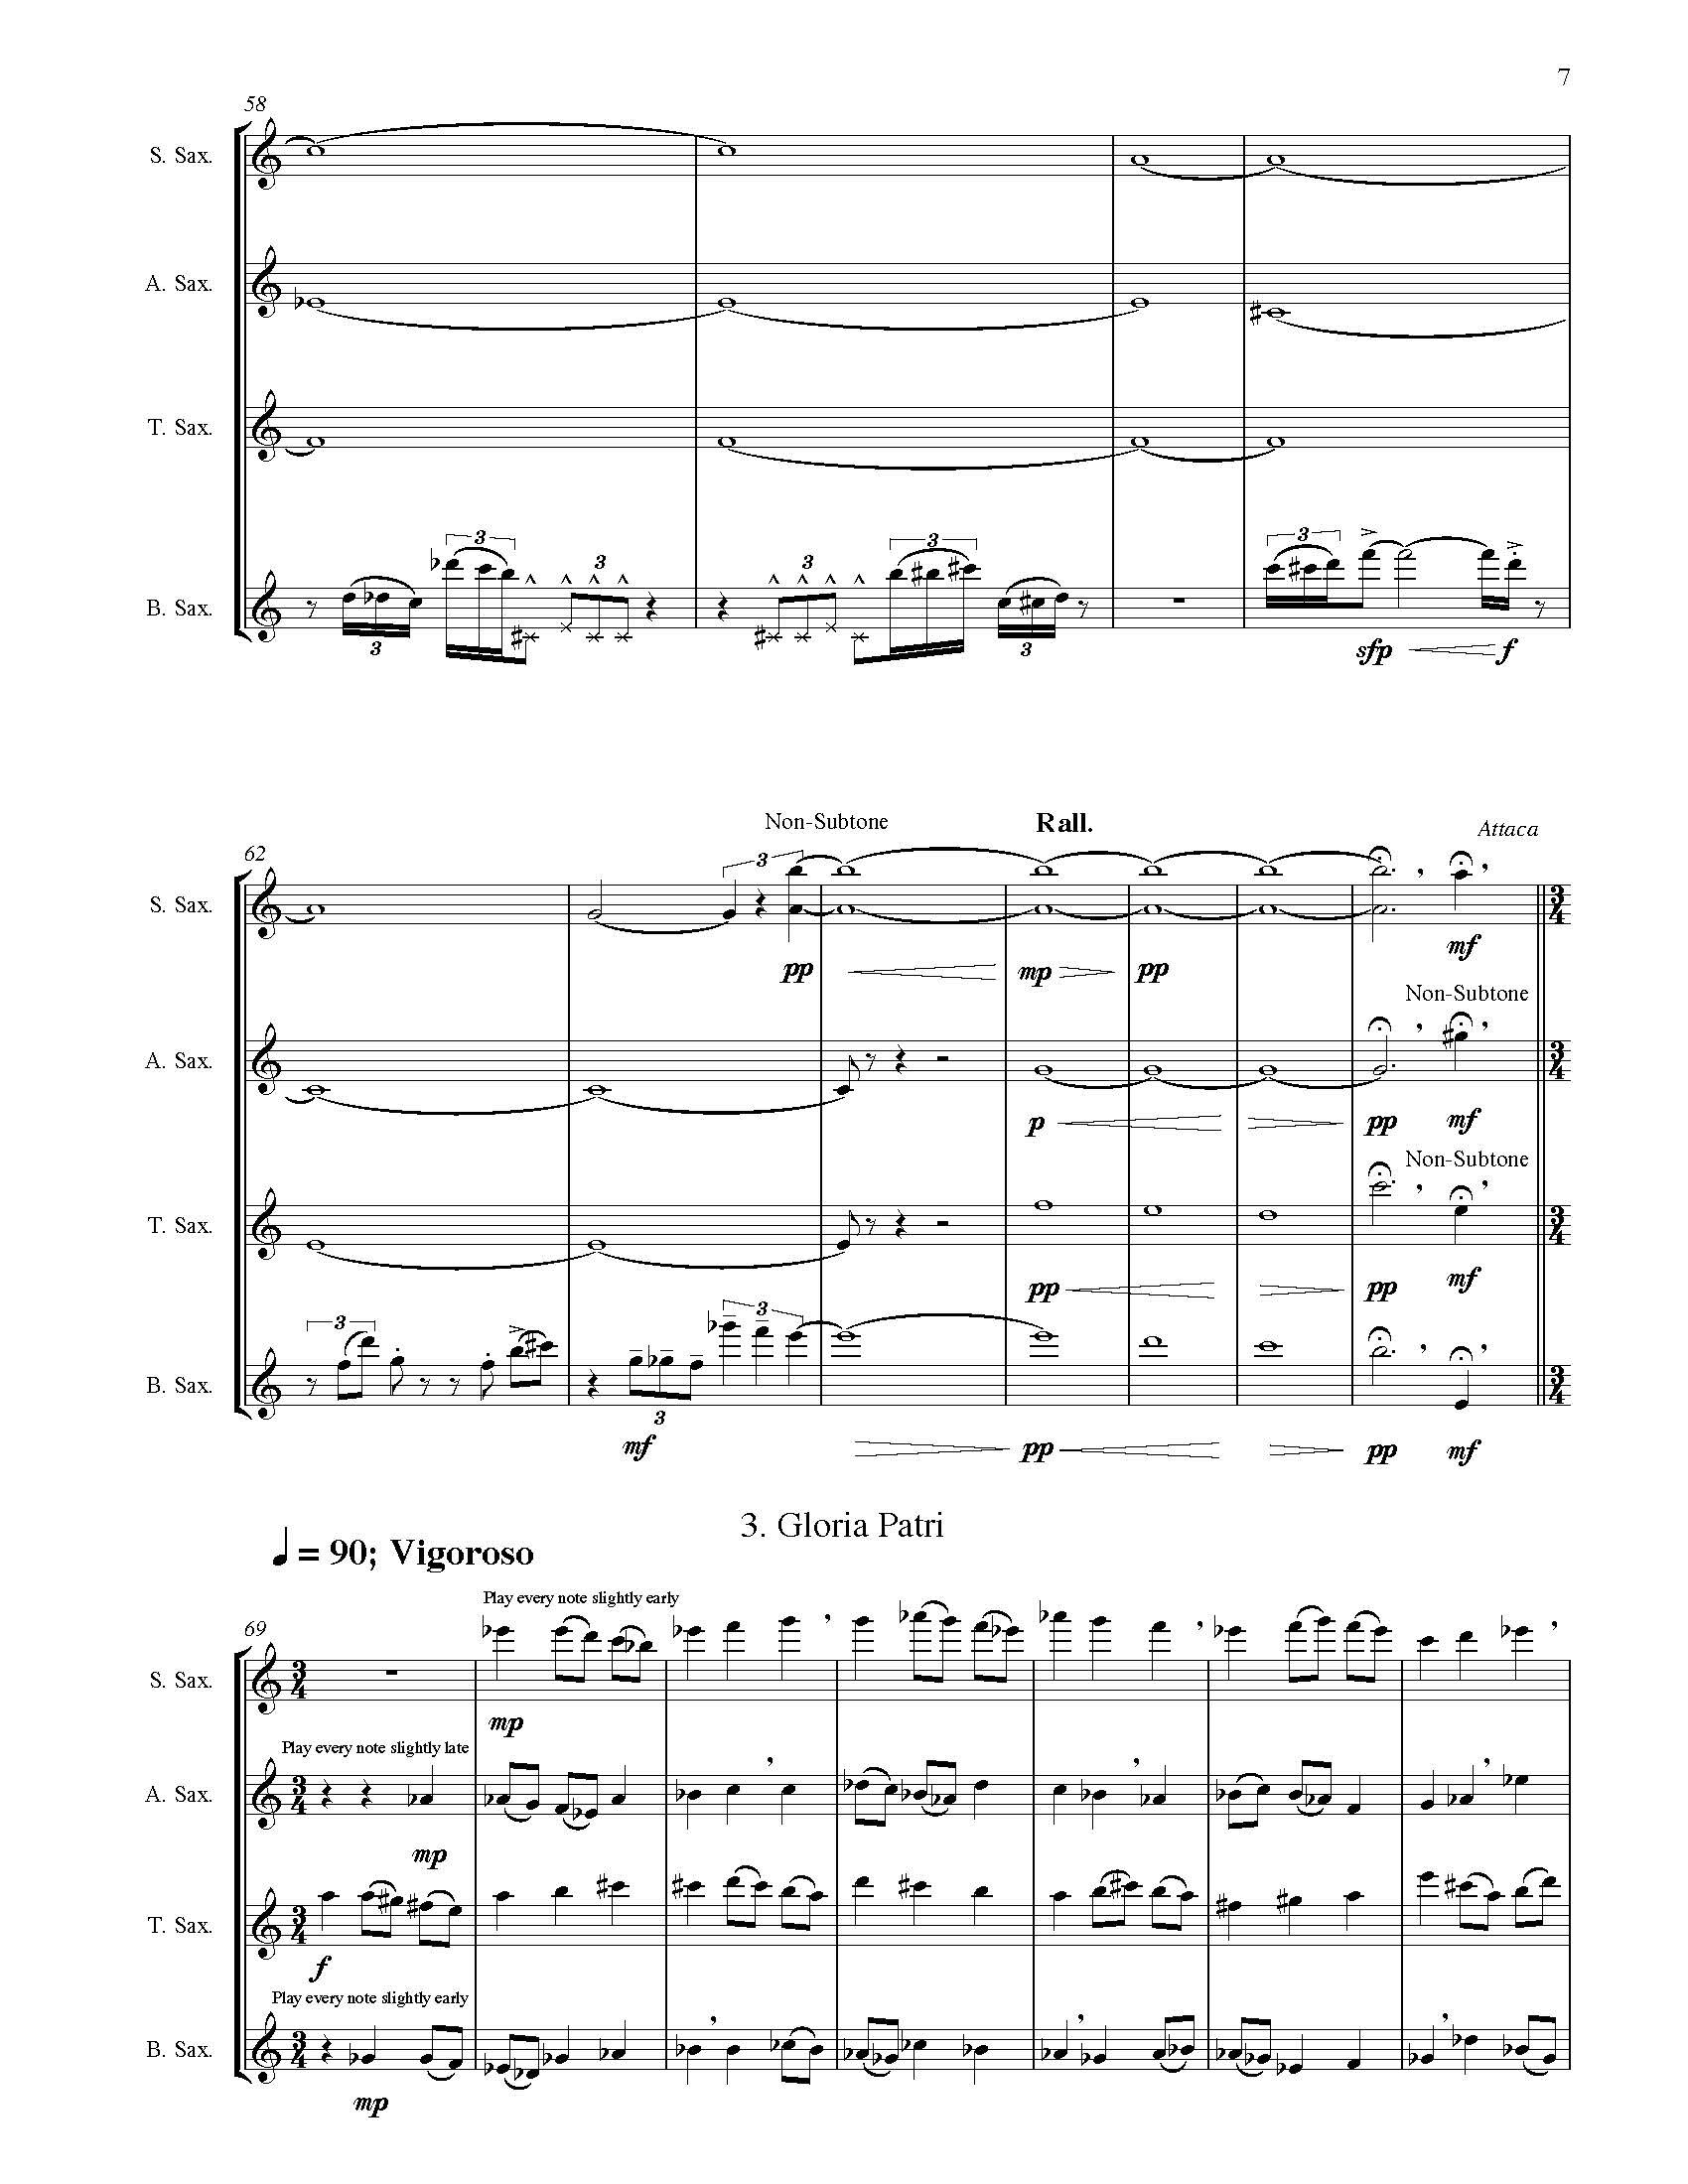 The Revivalist - Complete Score_Page_15.jpg